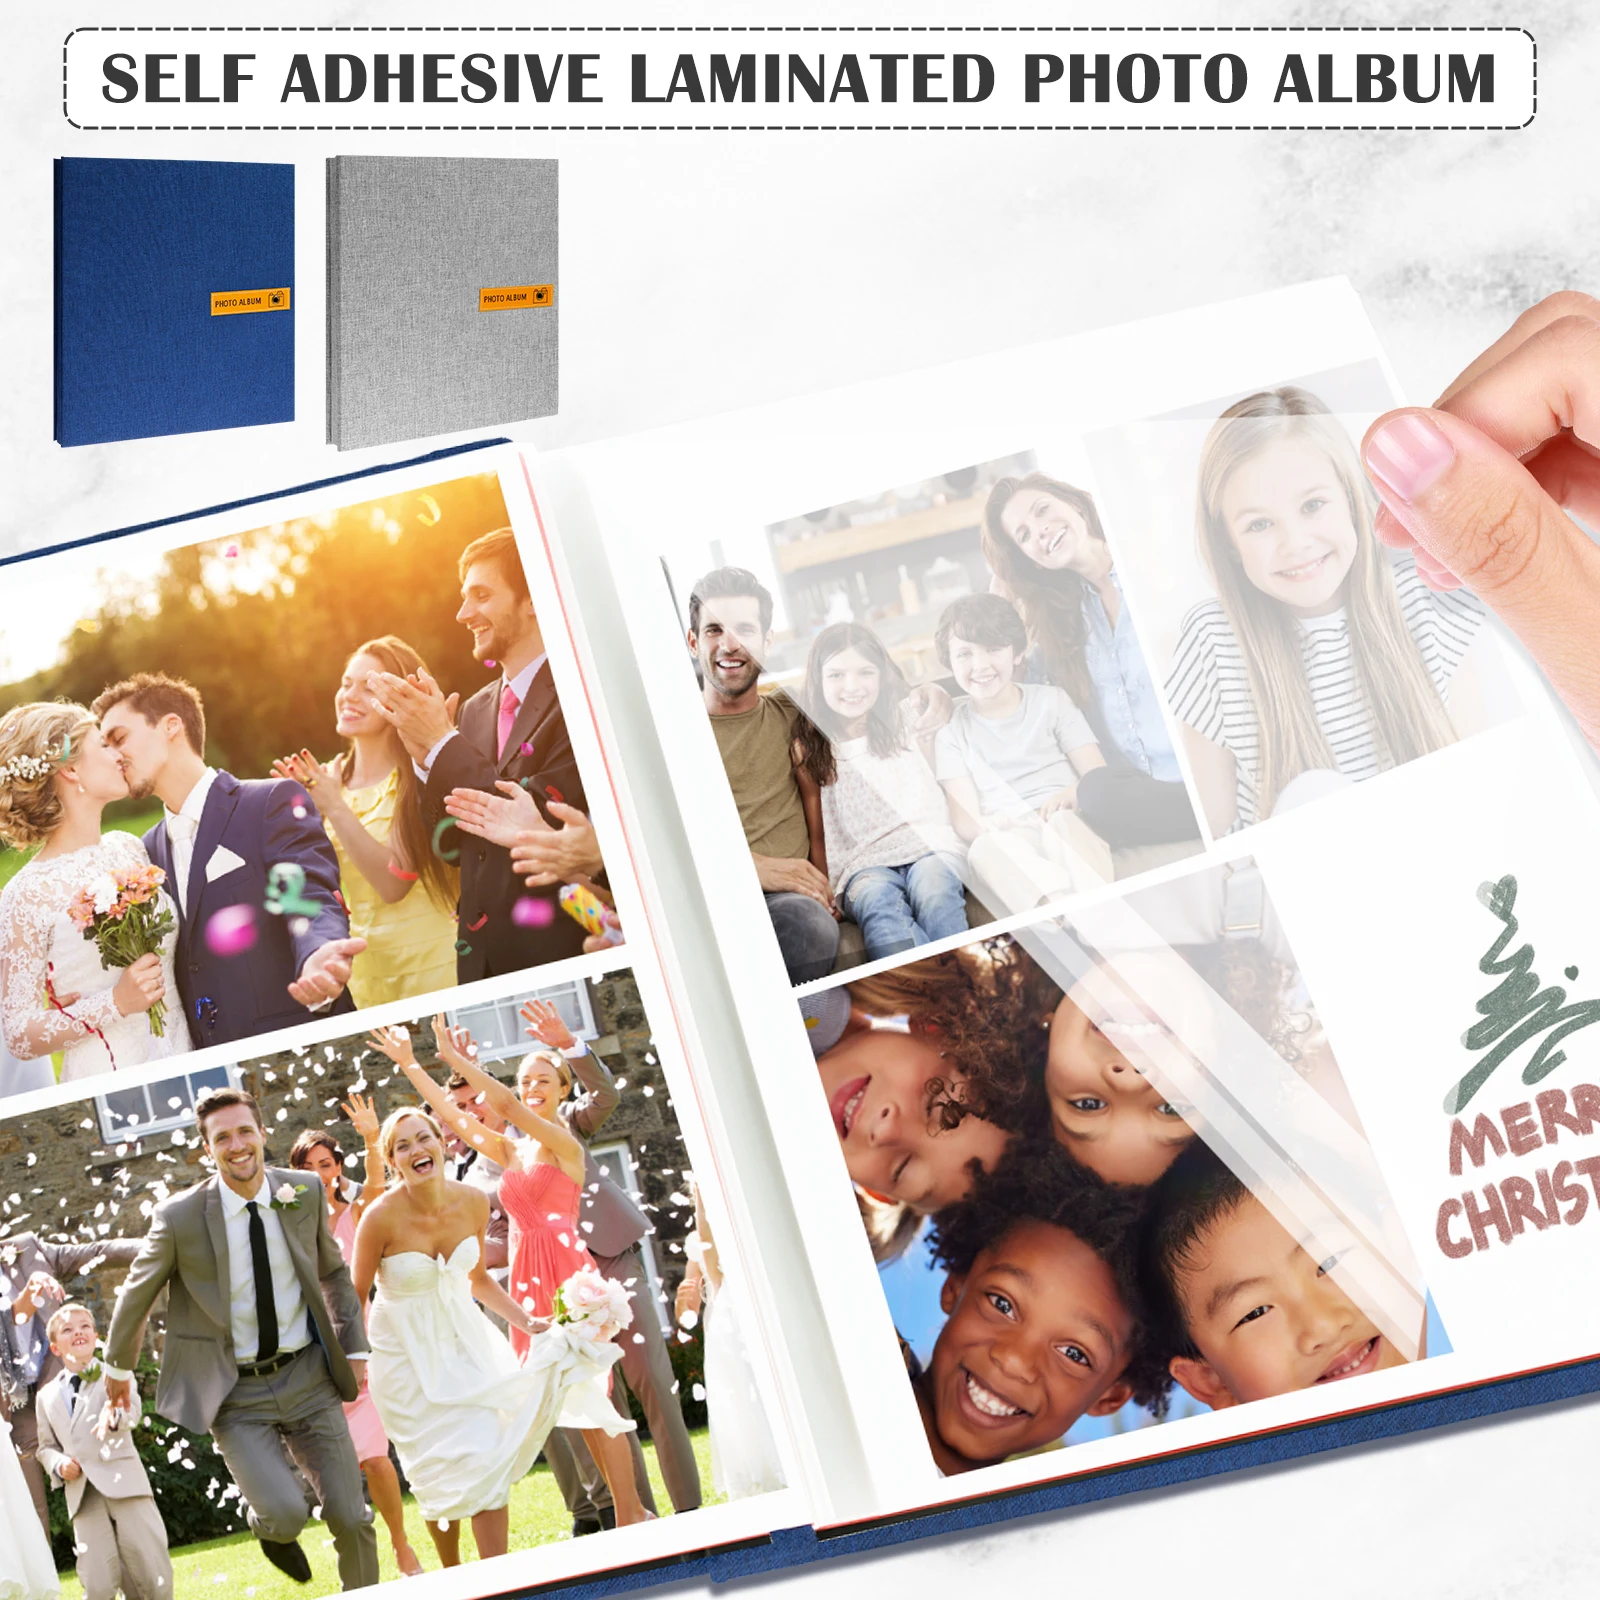 

NEW 60 Pages Large Photo Album Self Adhesive Photo Album with Pen 2x3in 3x5in 4x6in 5x7in 8x10in Pictures DIY Scrapbook Album